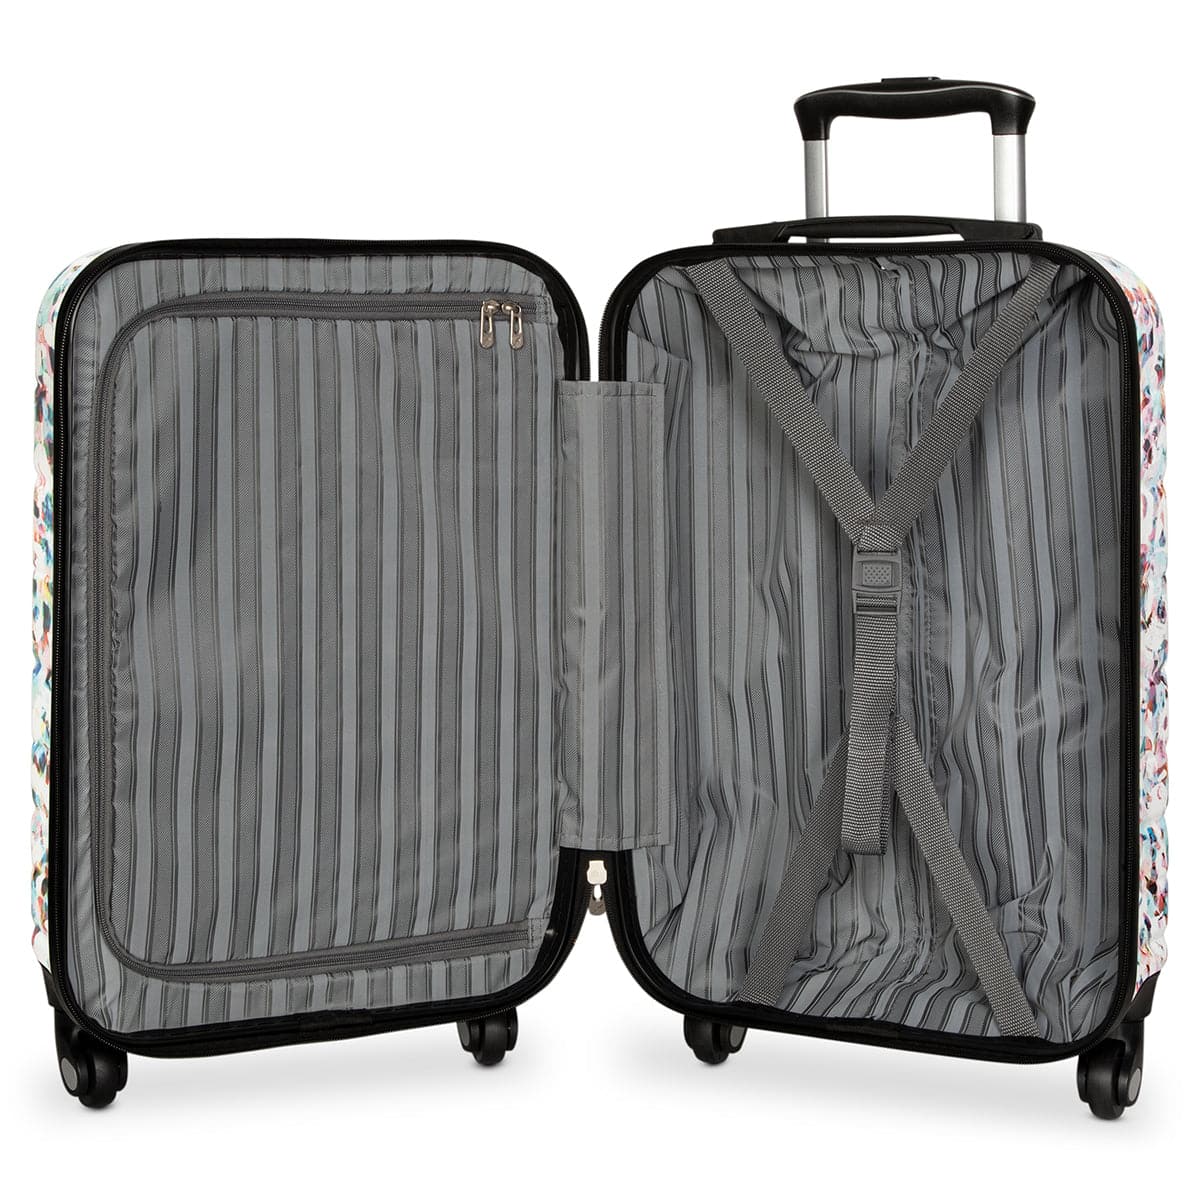 Skyway Epic 2.0  Hardside Carry-On Luggage